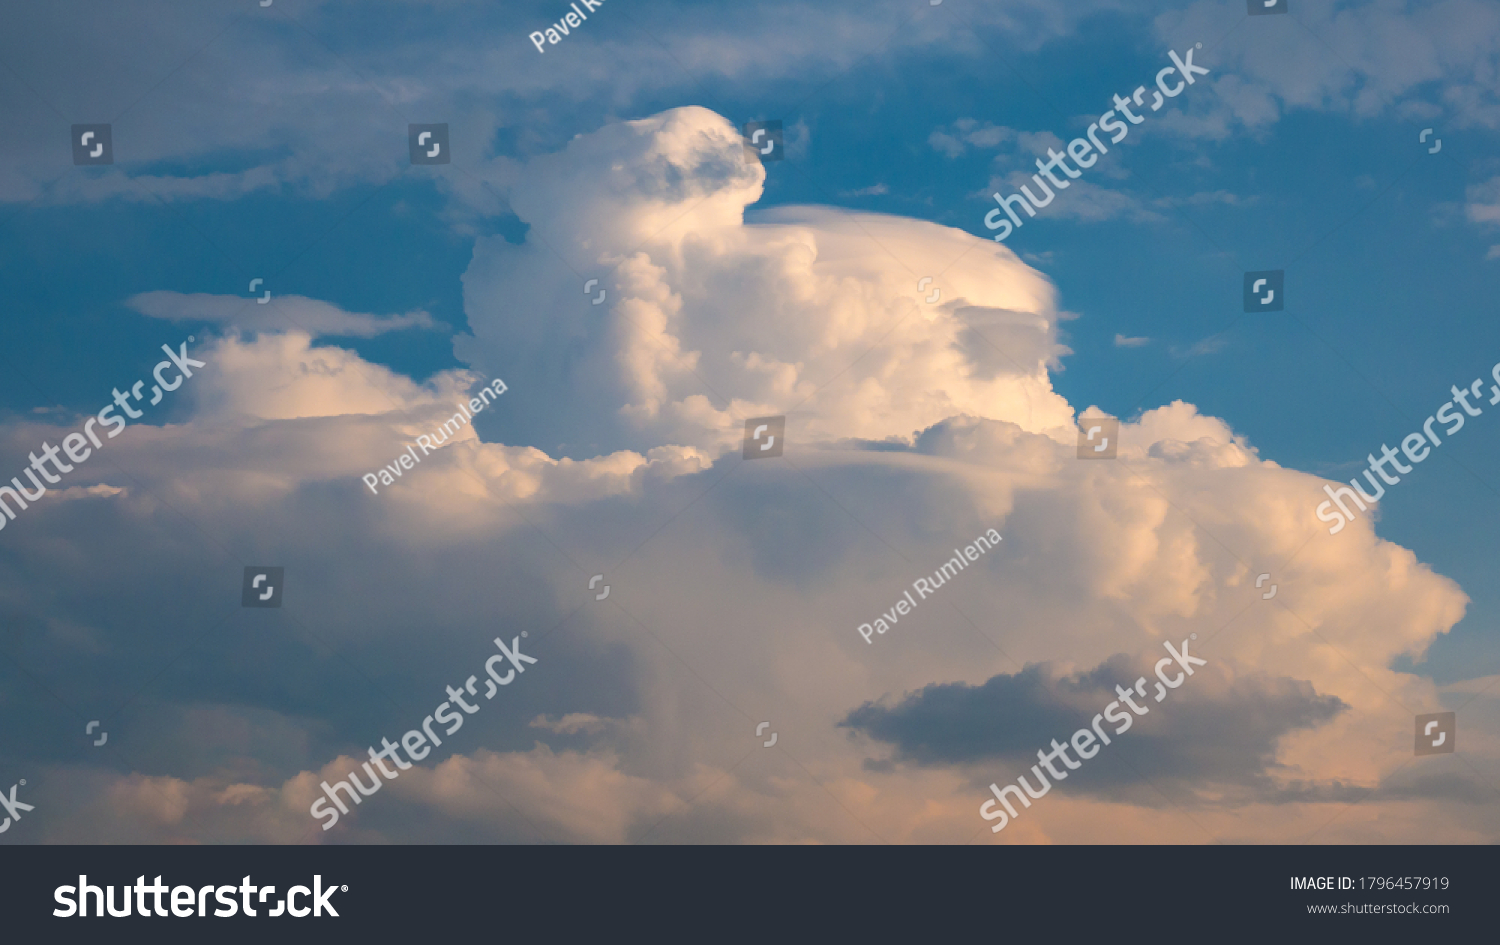 Massive rain cloud - cumulus congestus or towering cumulus - forming in the blue sky #1796457919